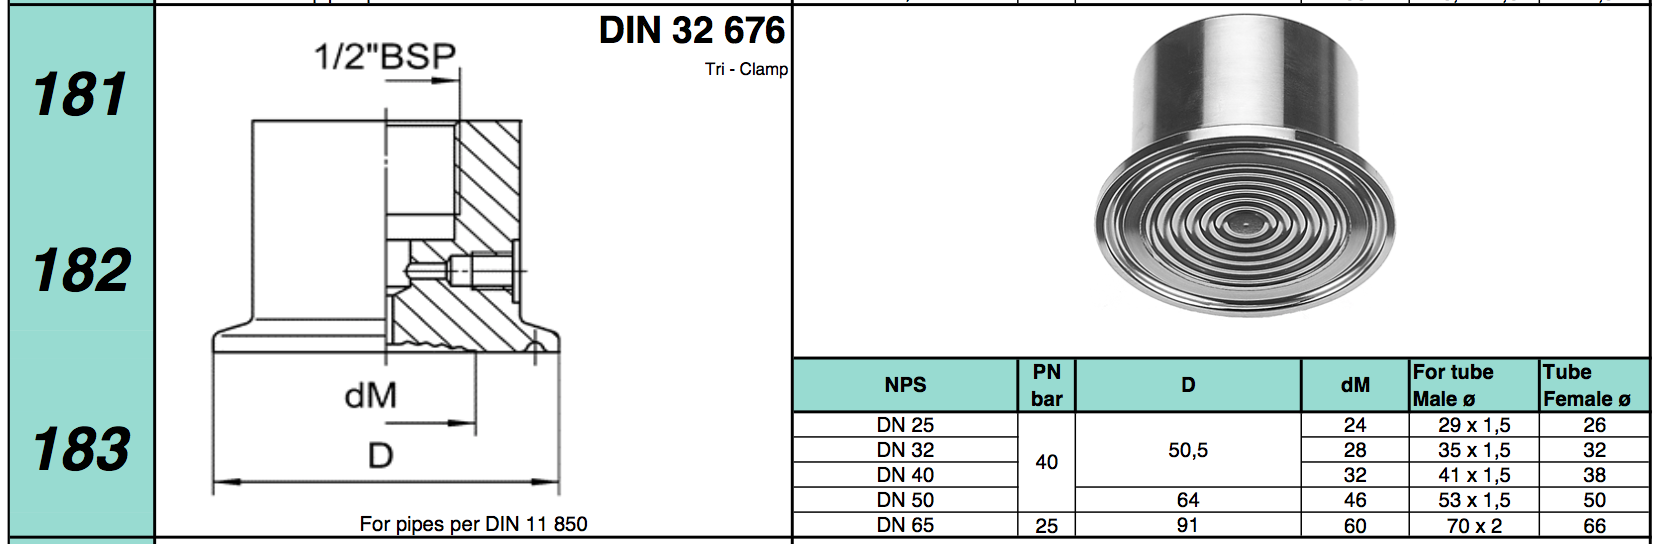 chuẩn kết nối dạng tri clamp DIN 32 676